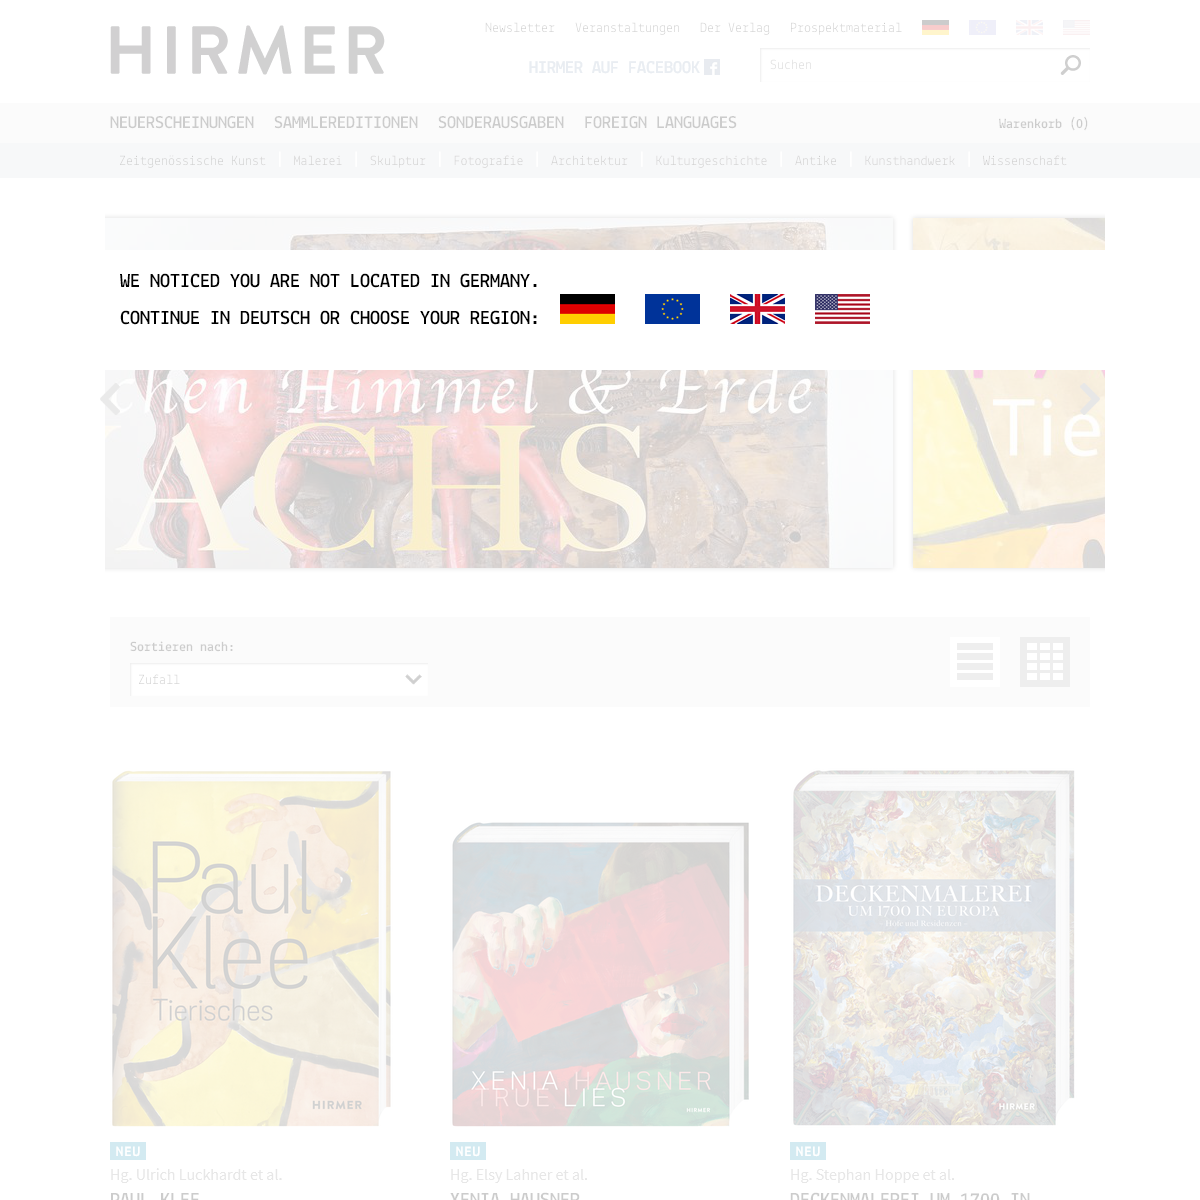 A complete backup of hirmerverlag.de